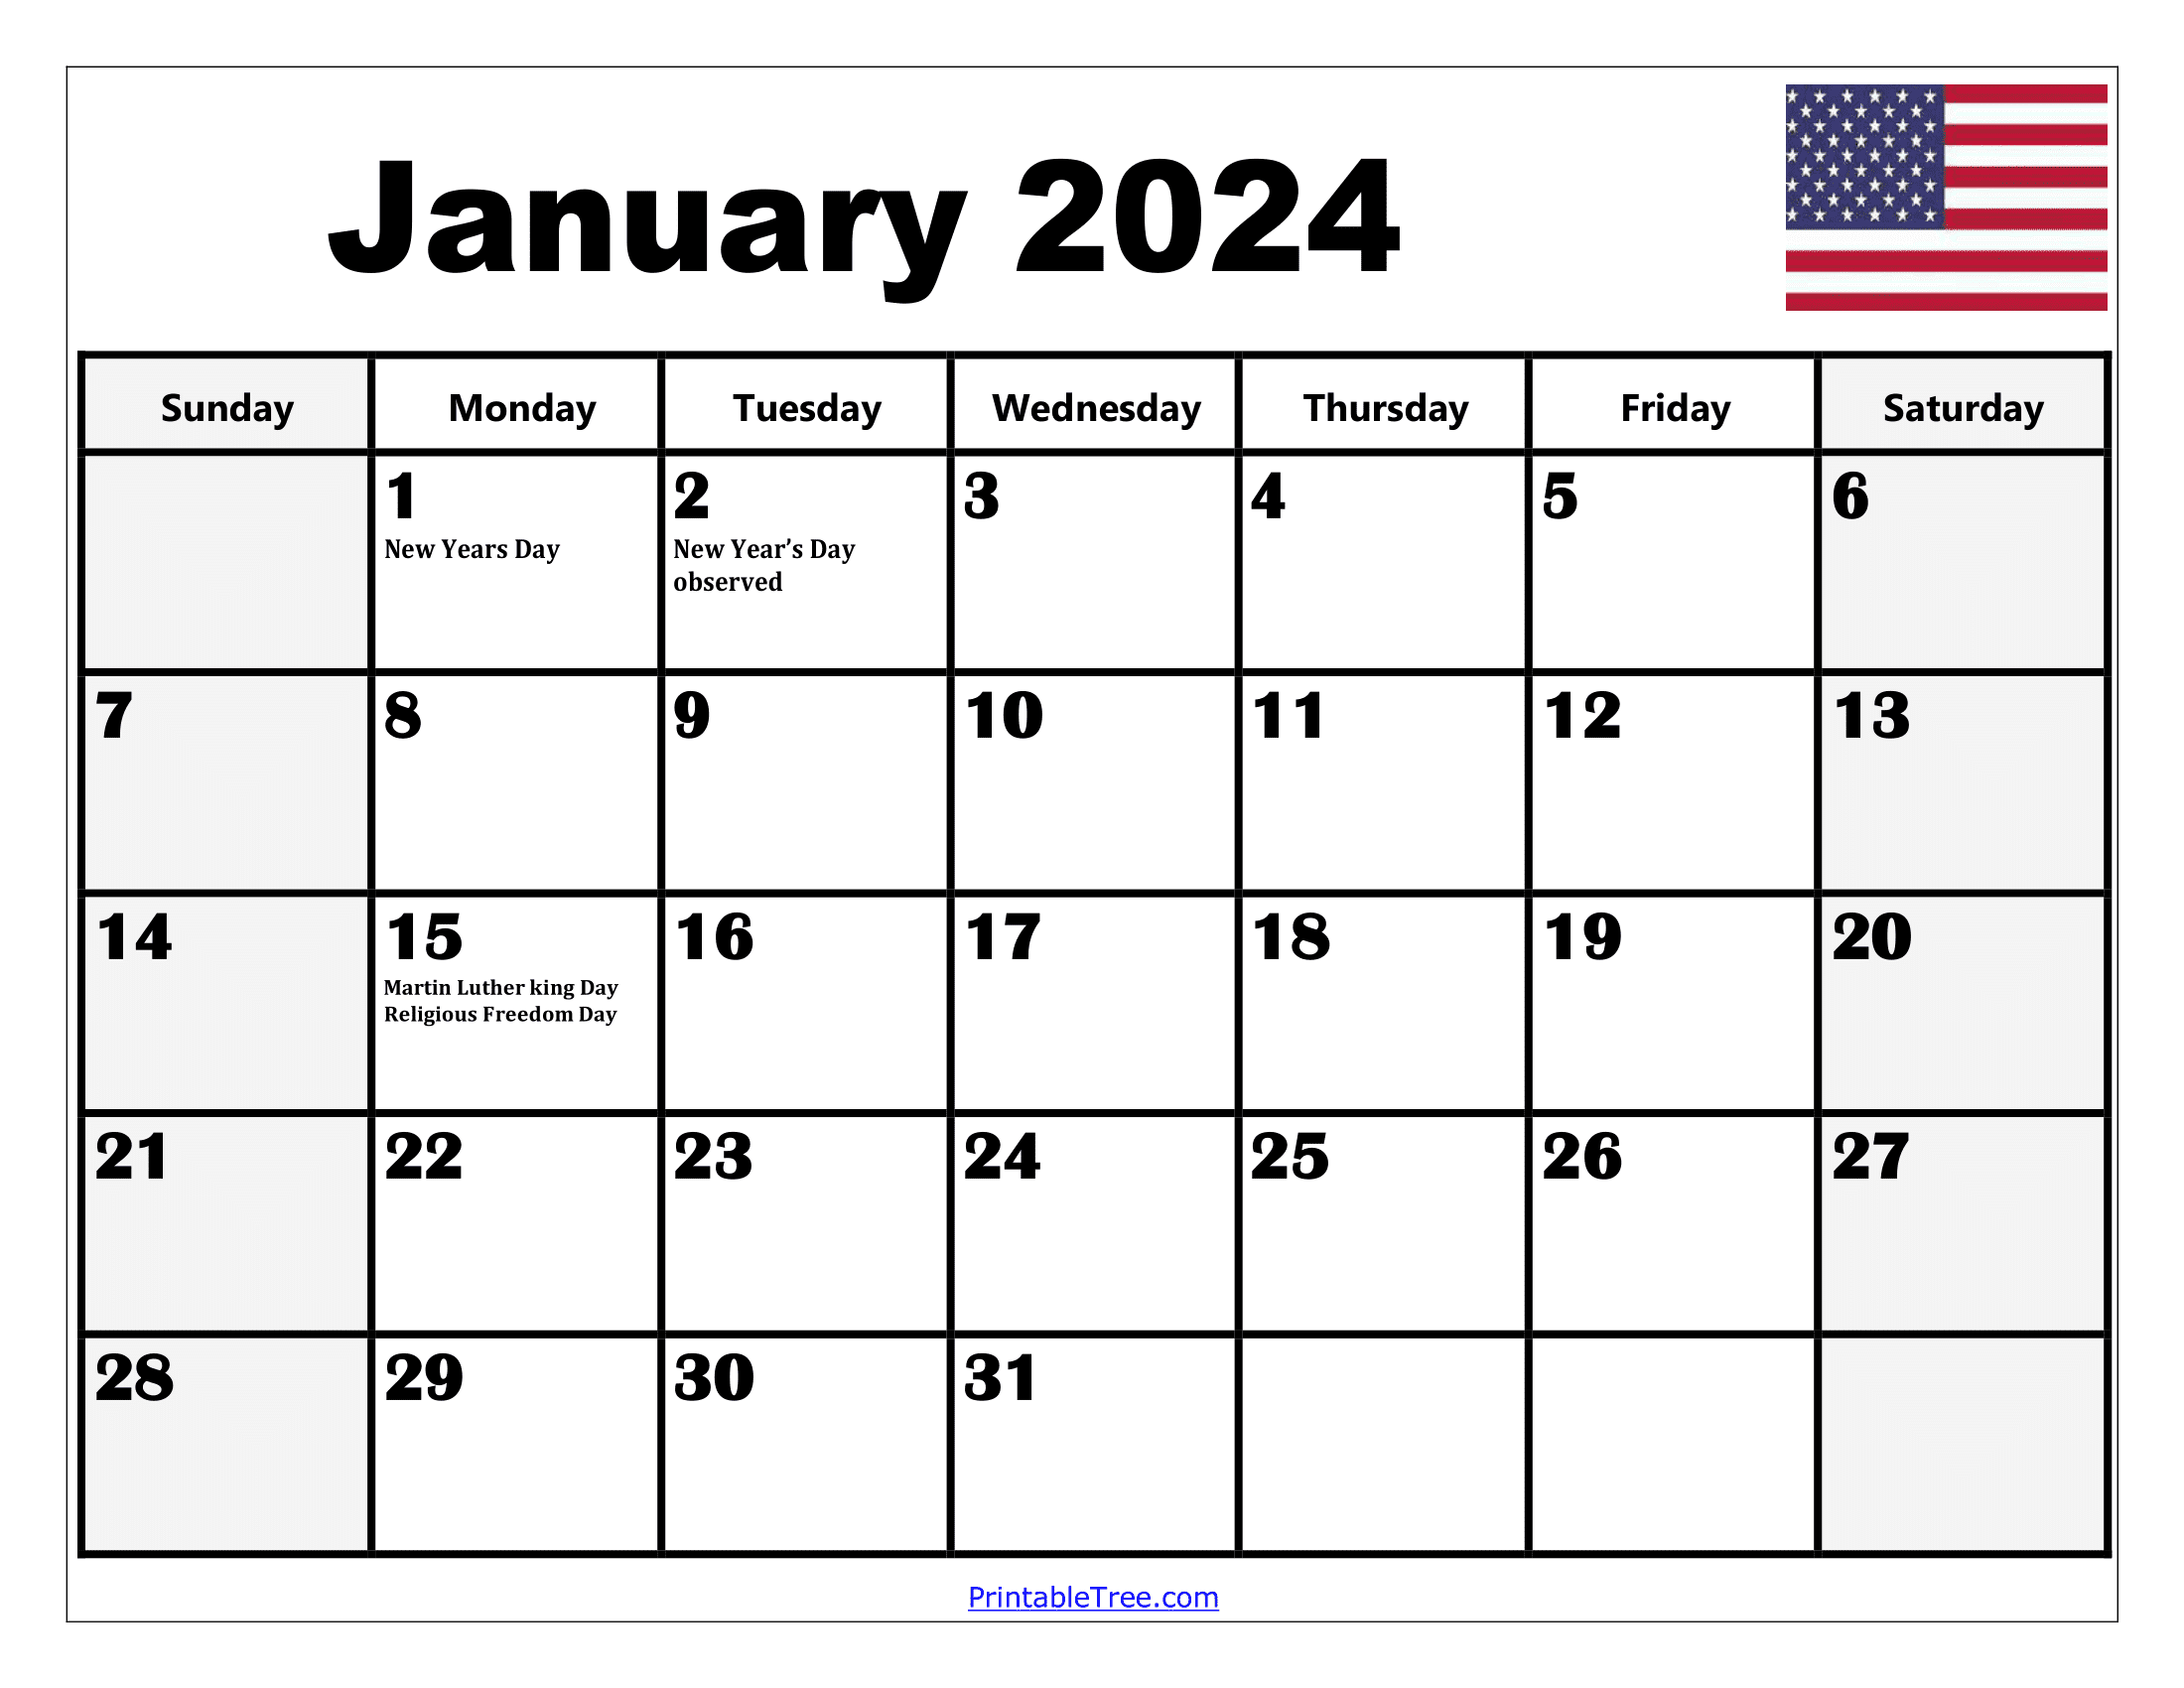 2024 Holiday Calendar Days Free Download Nov 2024 Calendar - Free Printable 2024 Calendar With Holidays Month By Month